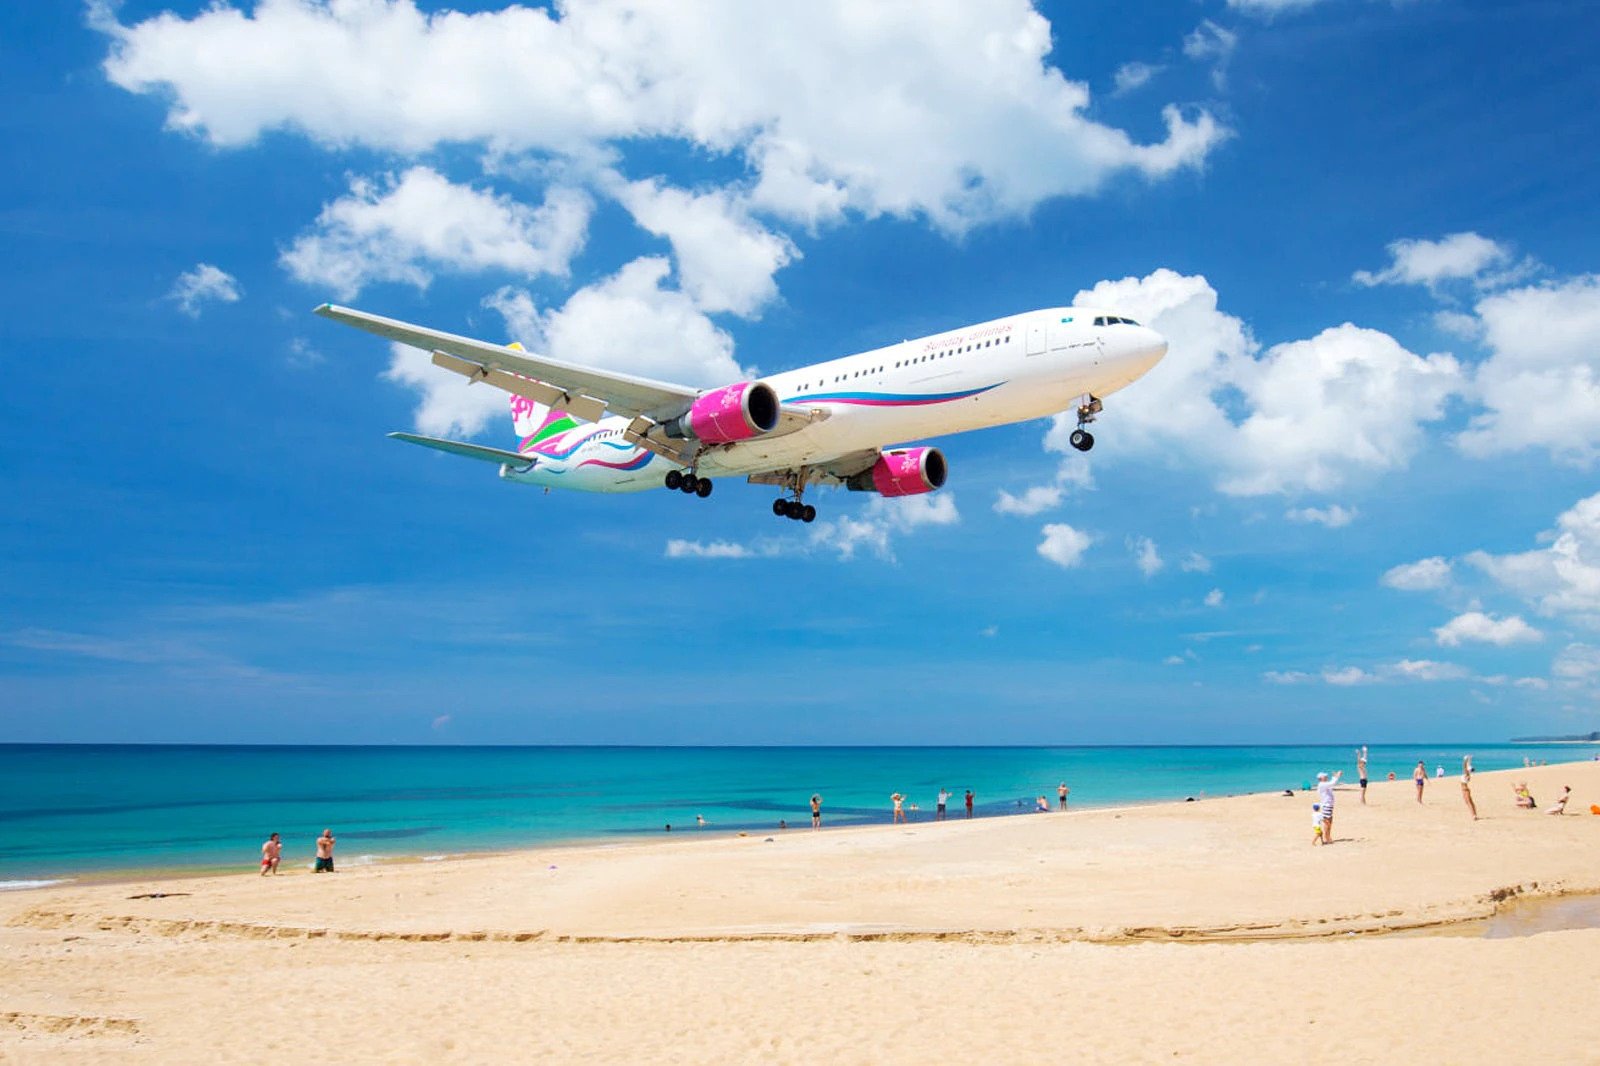 Mai Khao Beach: The World's Best Plane-Spotting Beach